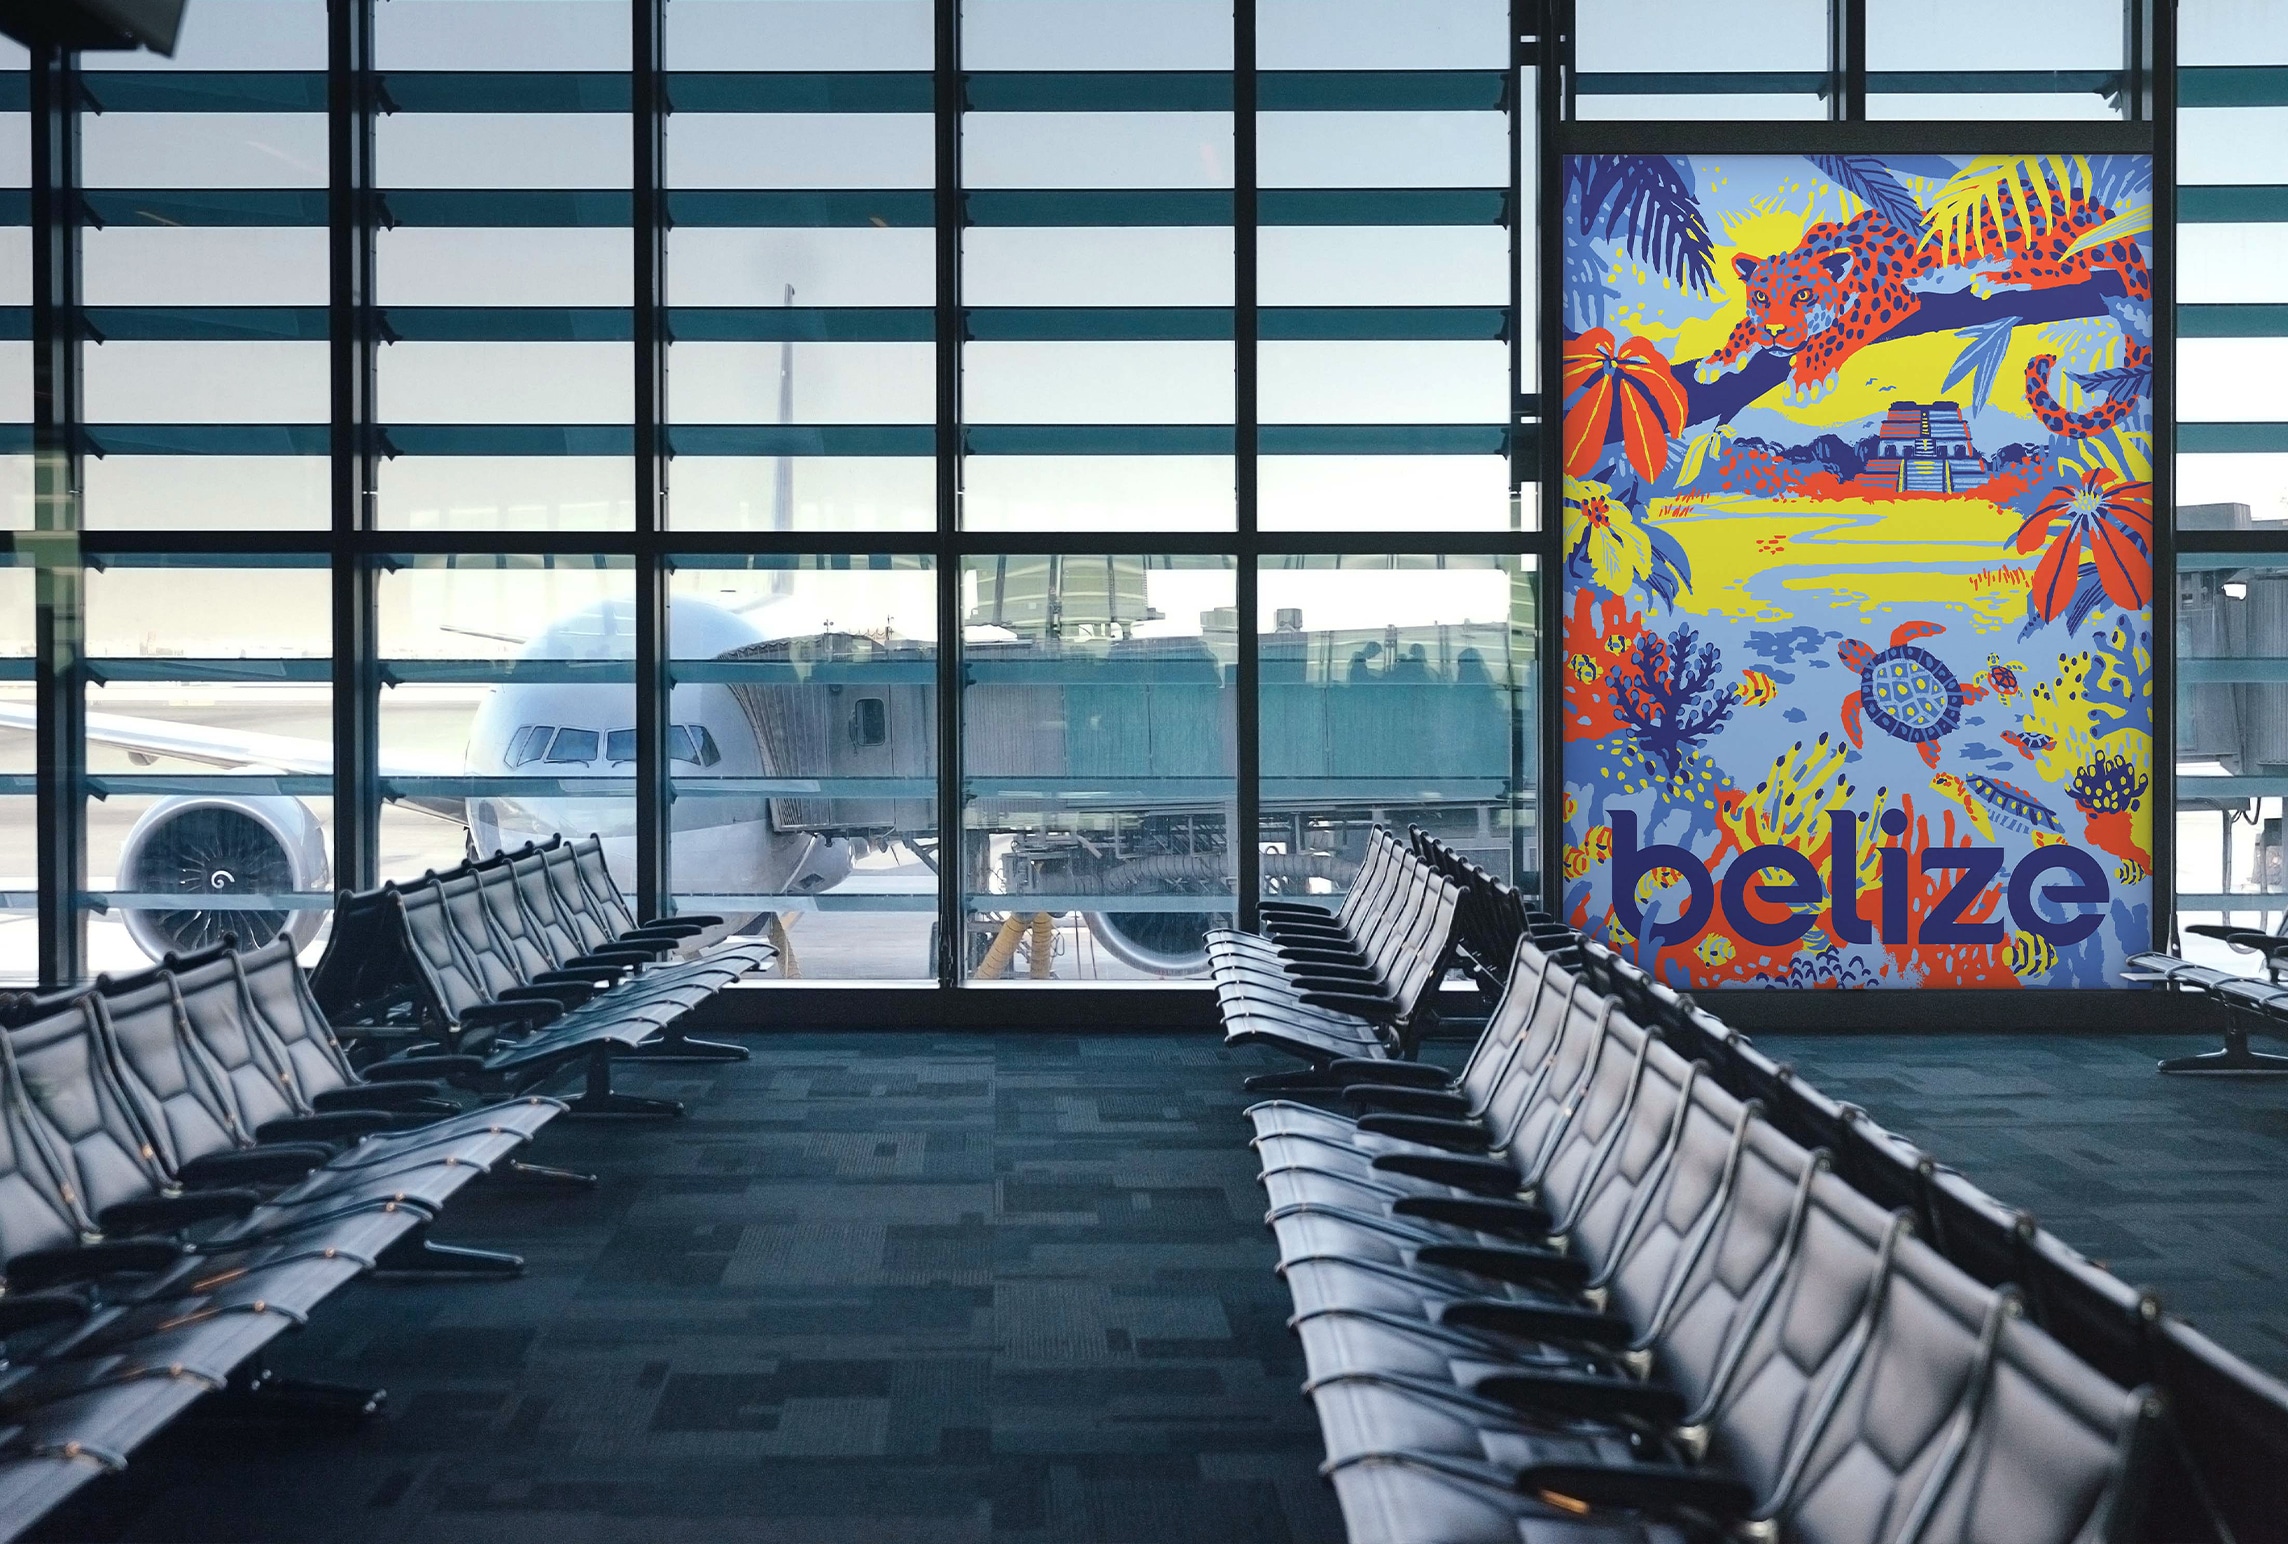 CV_Belize_Poster_Airport